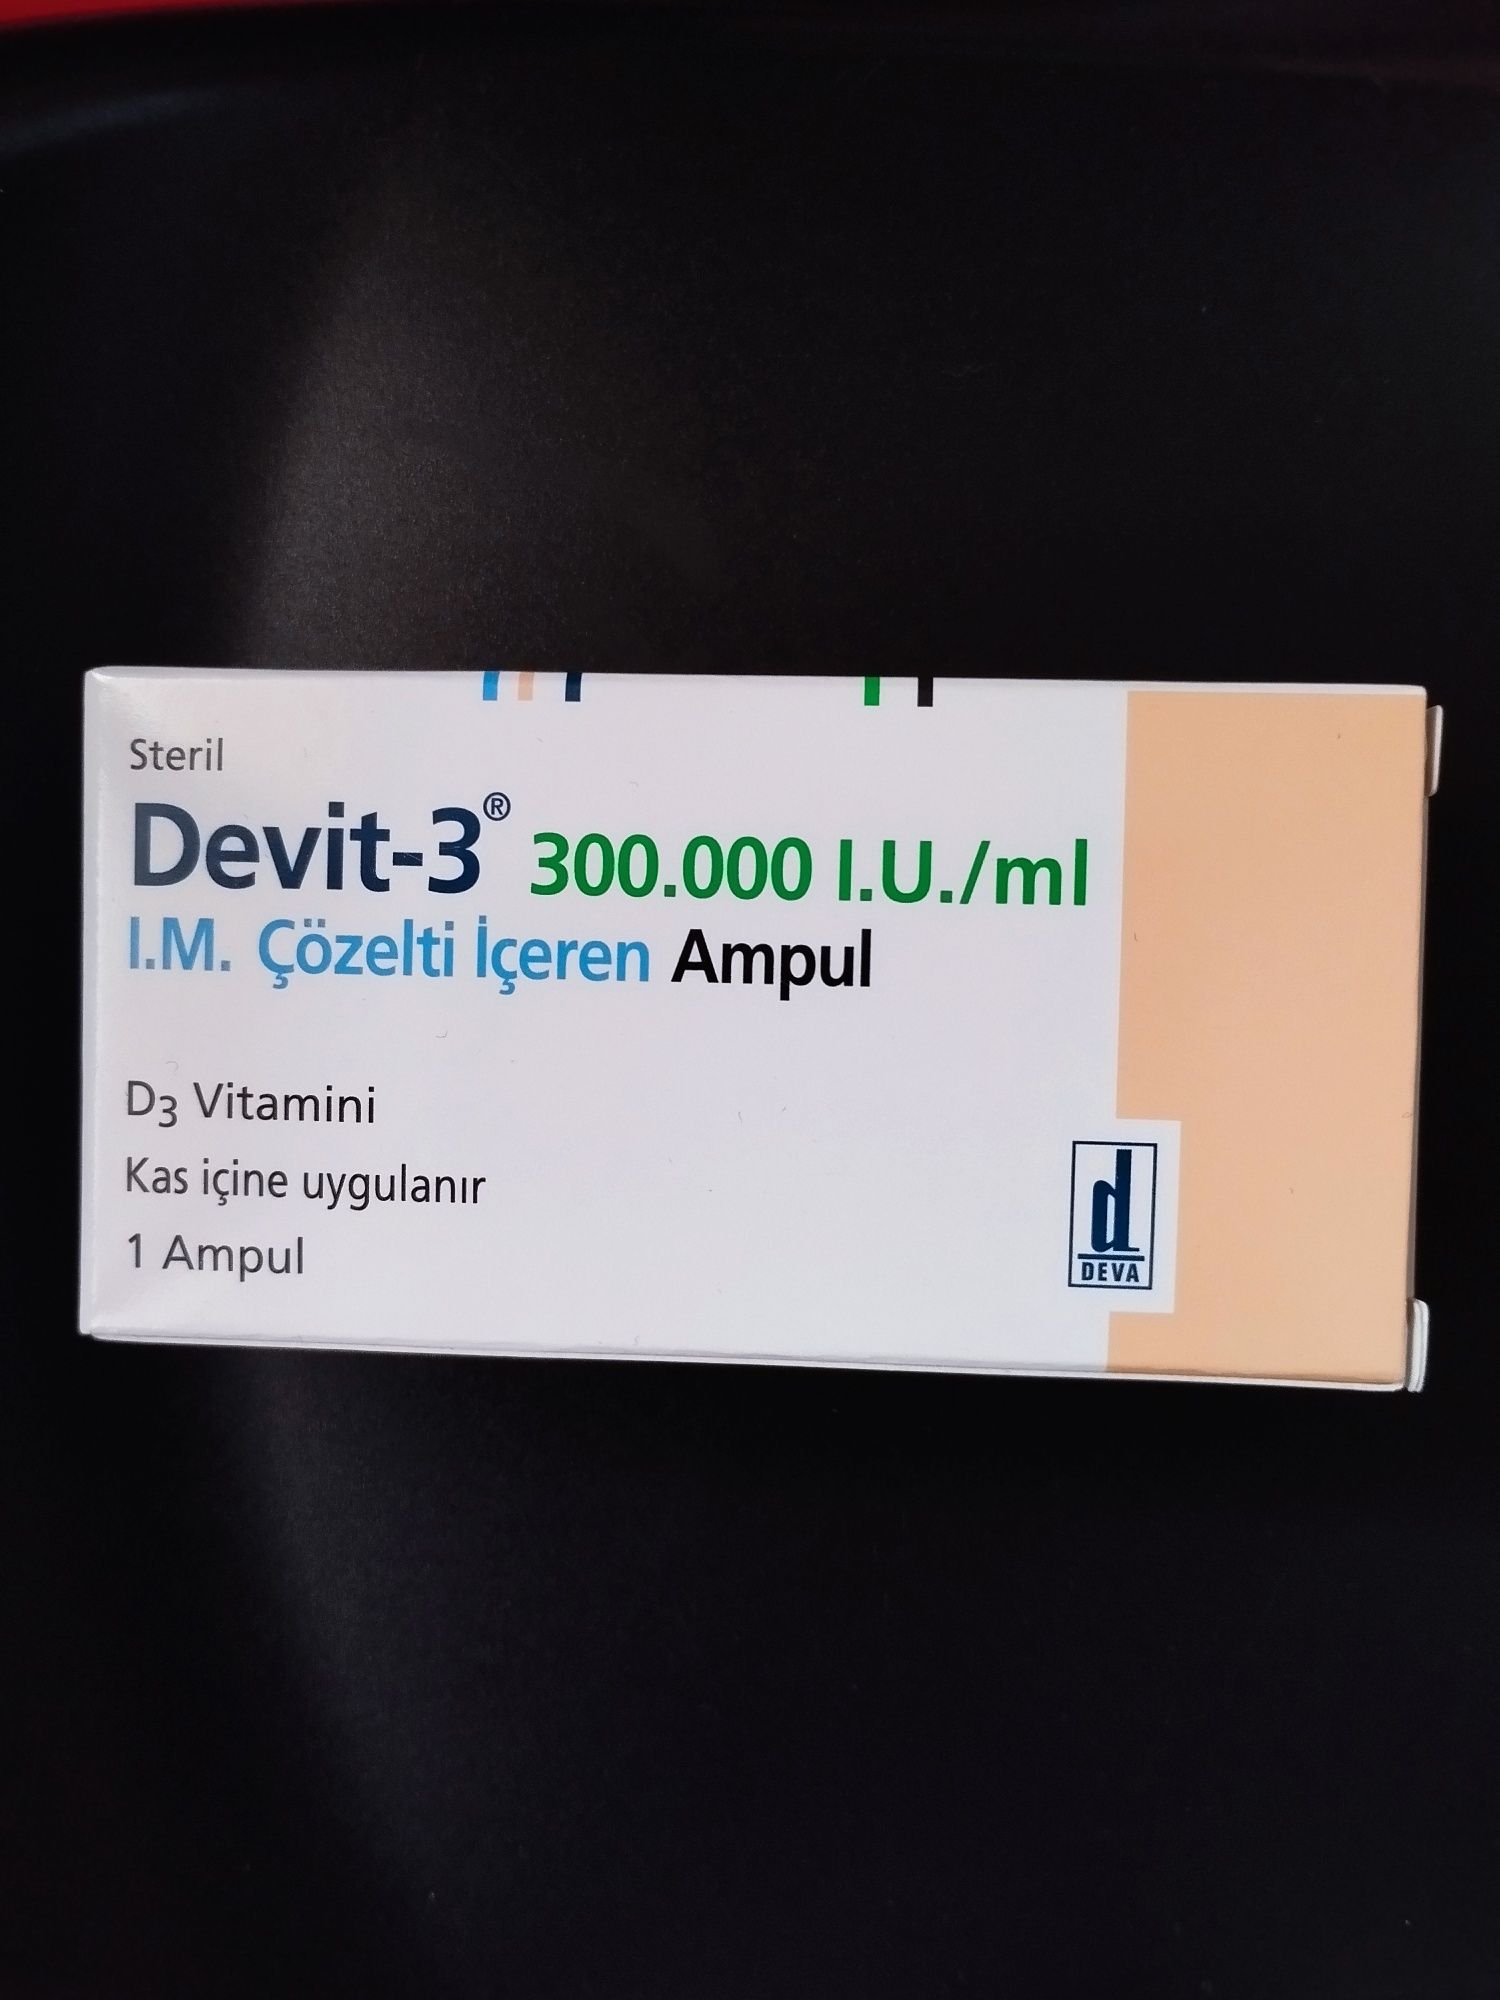 Devit - 3 Ampul 300.000 I. U/ ml